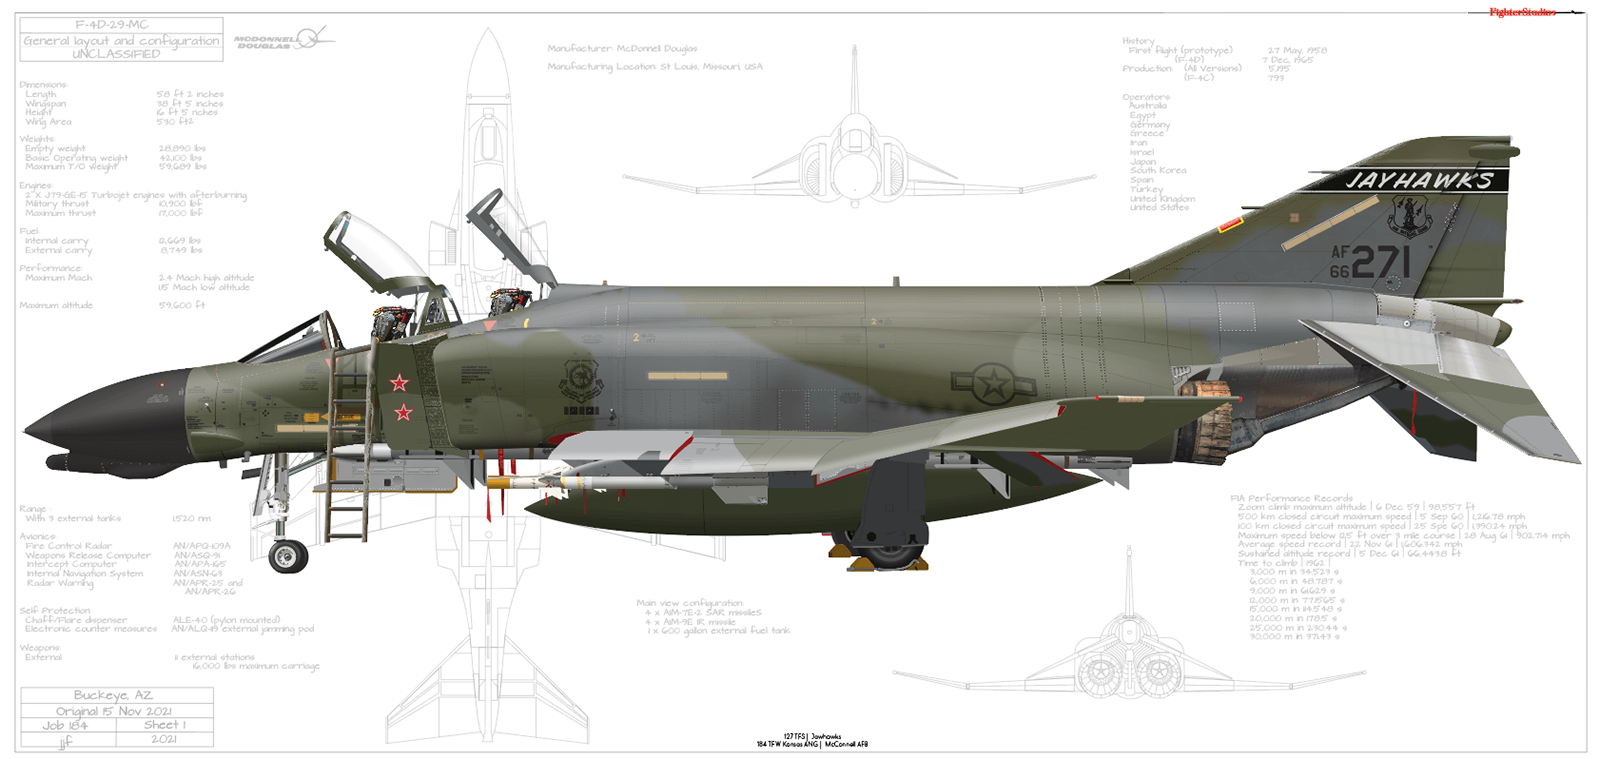 USAF F-4D 66-0271 Phantom II Profile